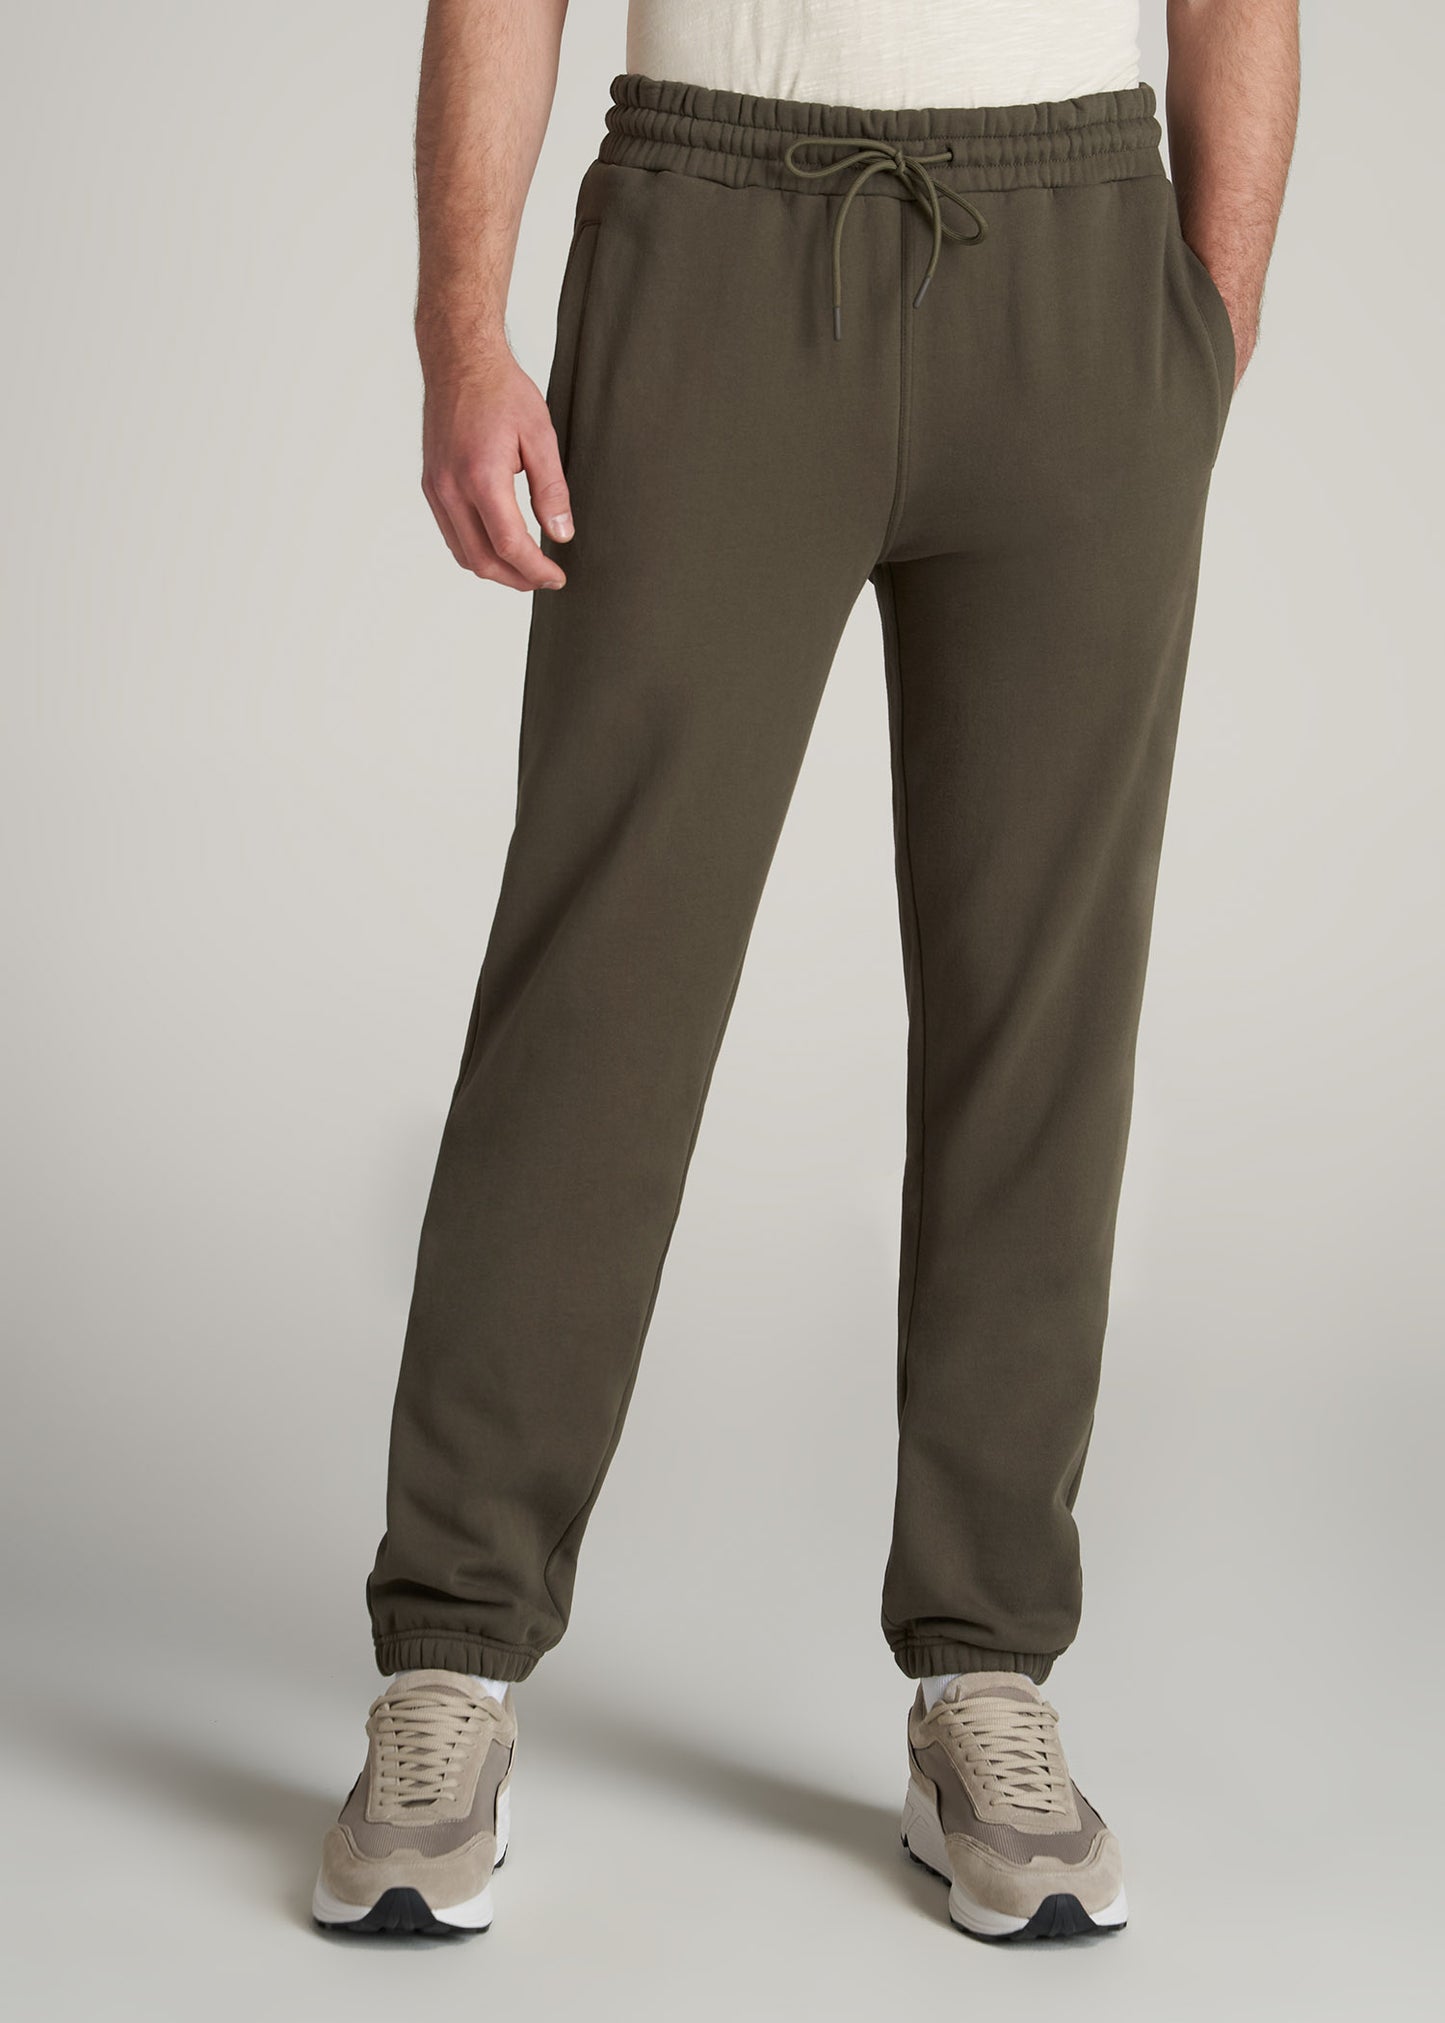       American-Tall-Men-Fleece-Sweatpants-Elastic-Bottom-Camo-Green-front